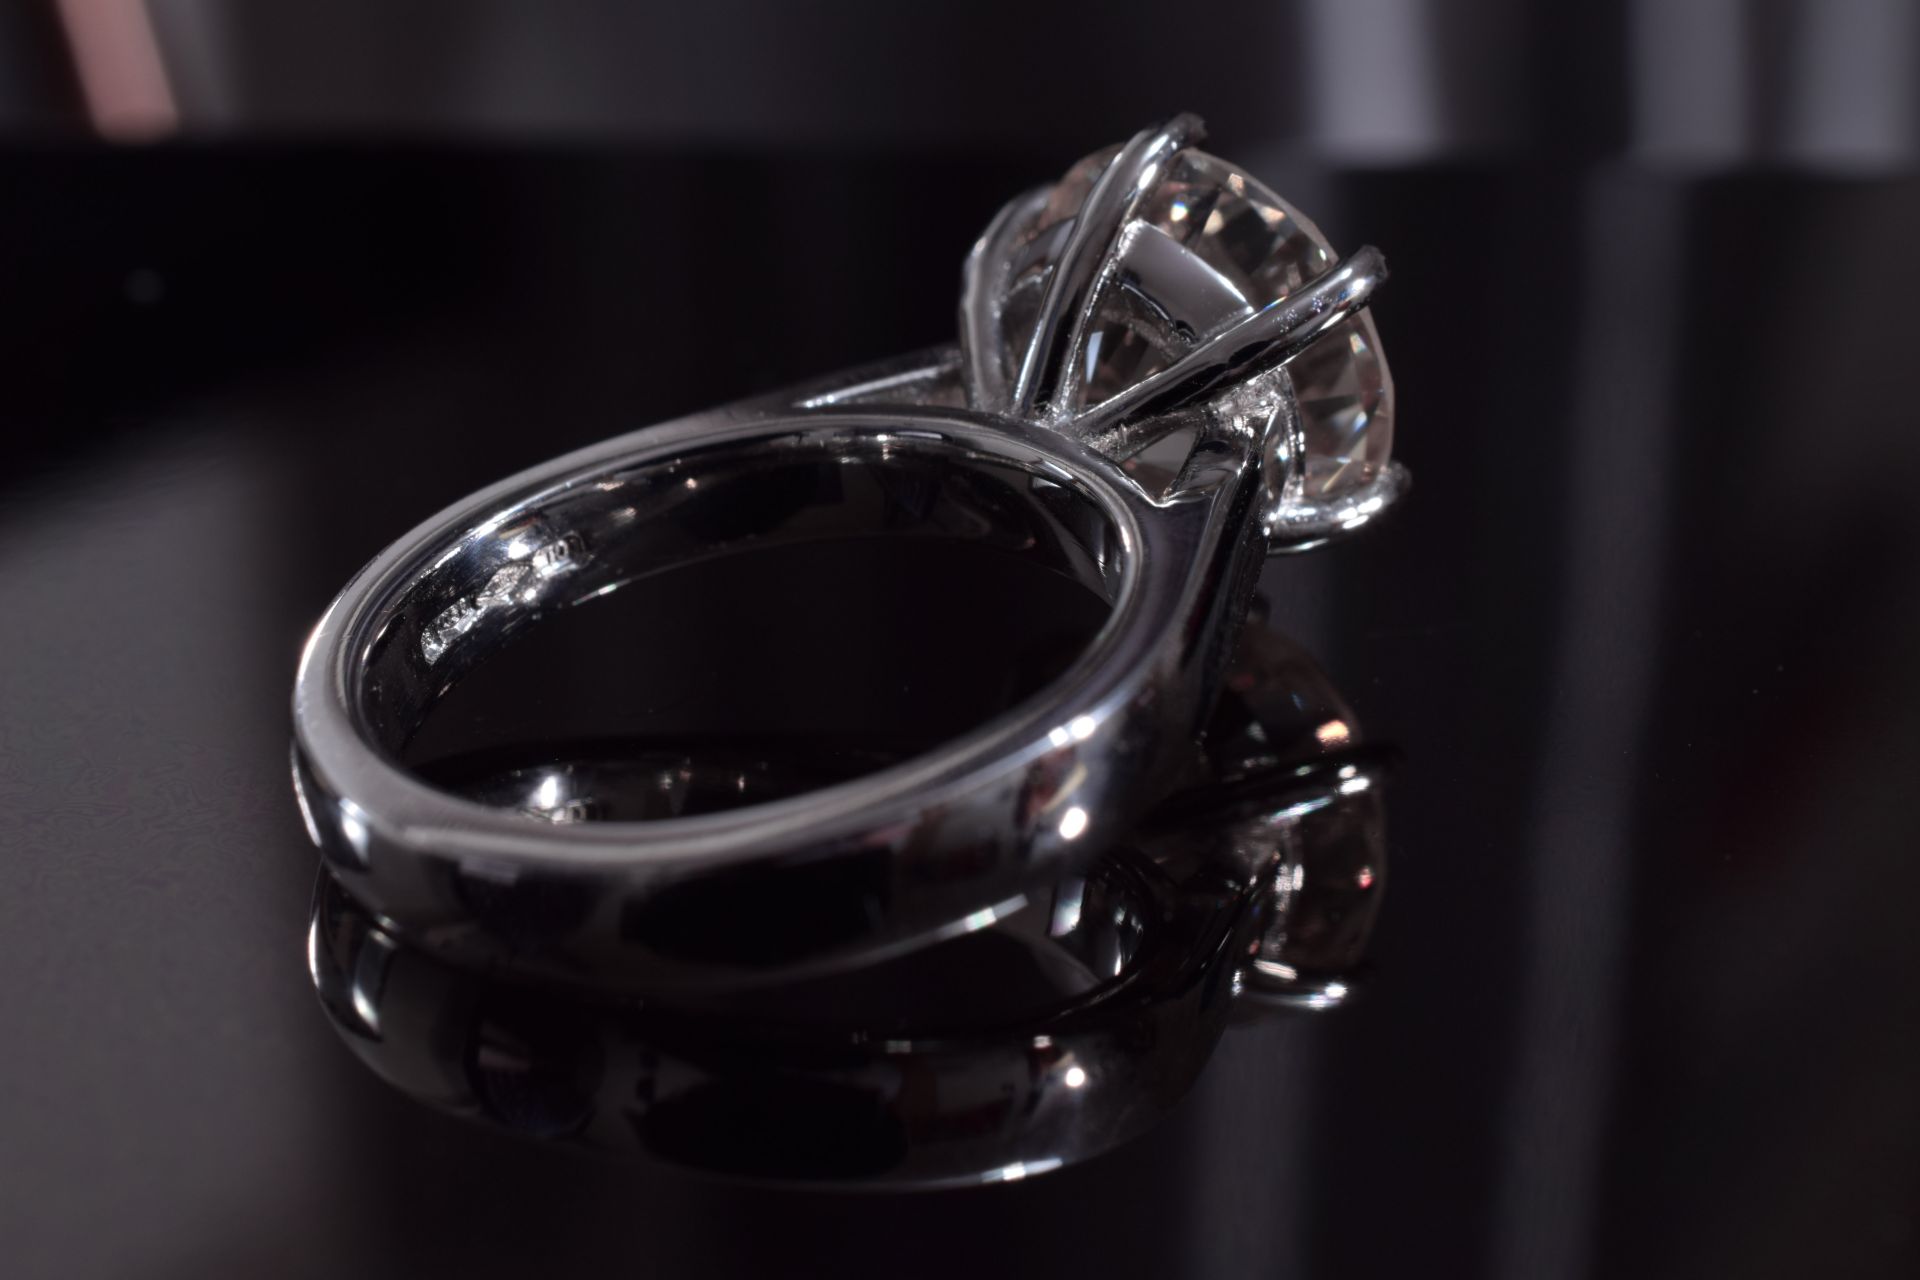 4.01 Carat Diamond Solitaire Ring - Image 5 of 7